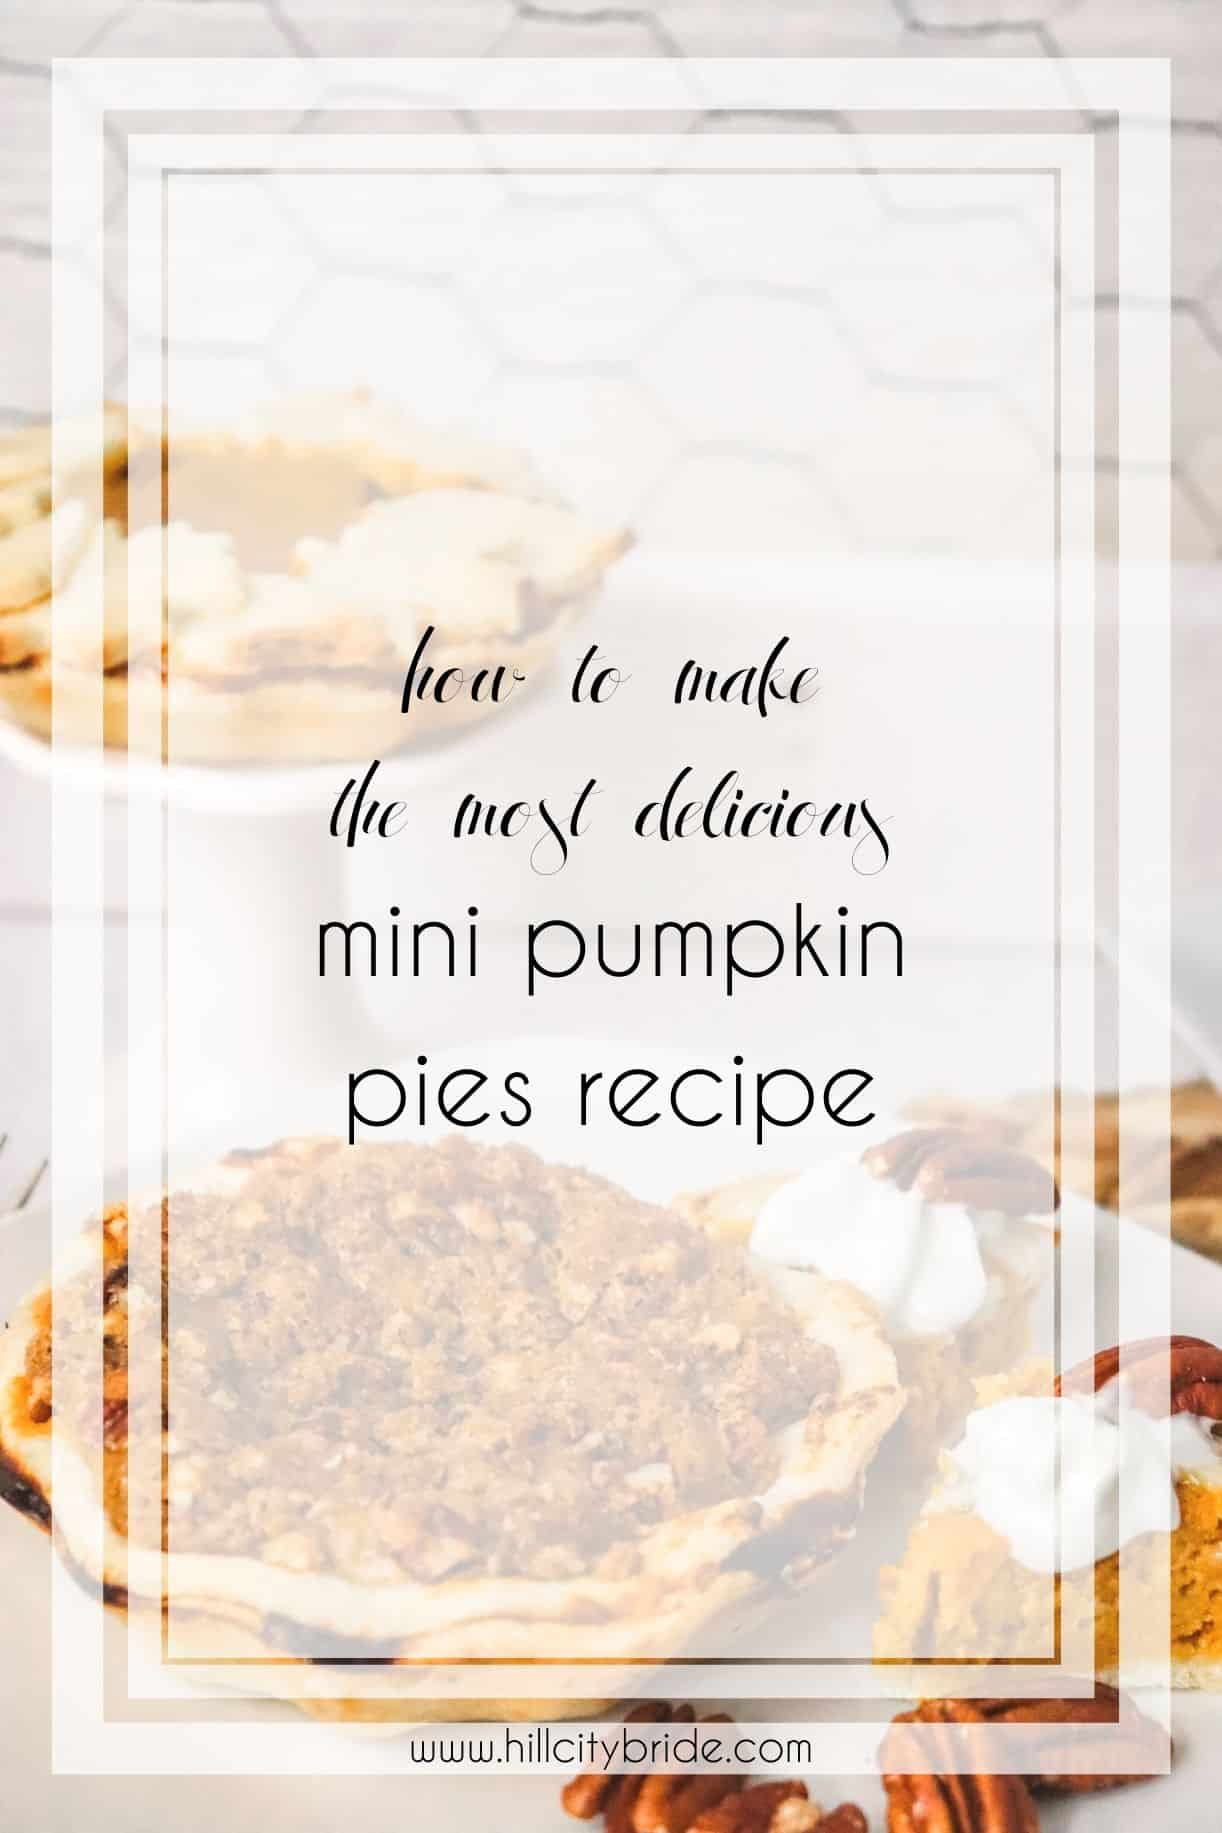 How to Make Mini Pumpkin Pies Recipe | Hill City Bride Blog